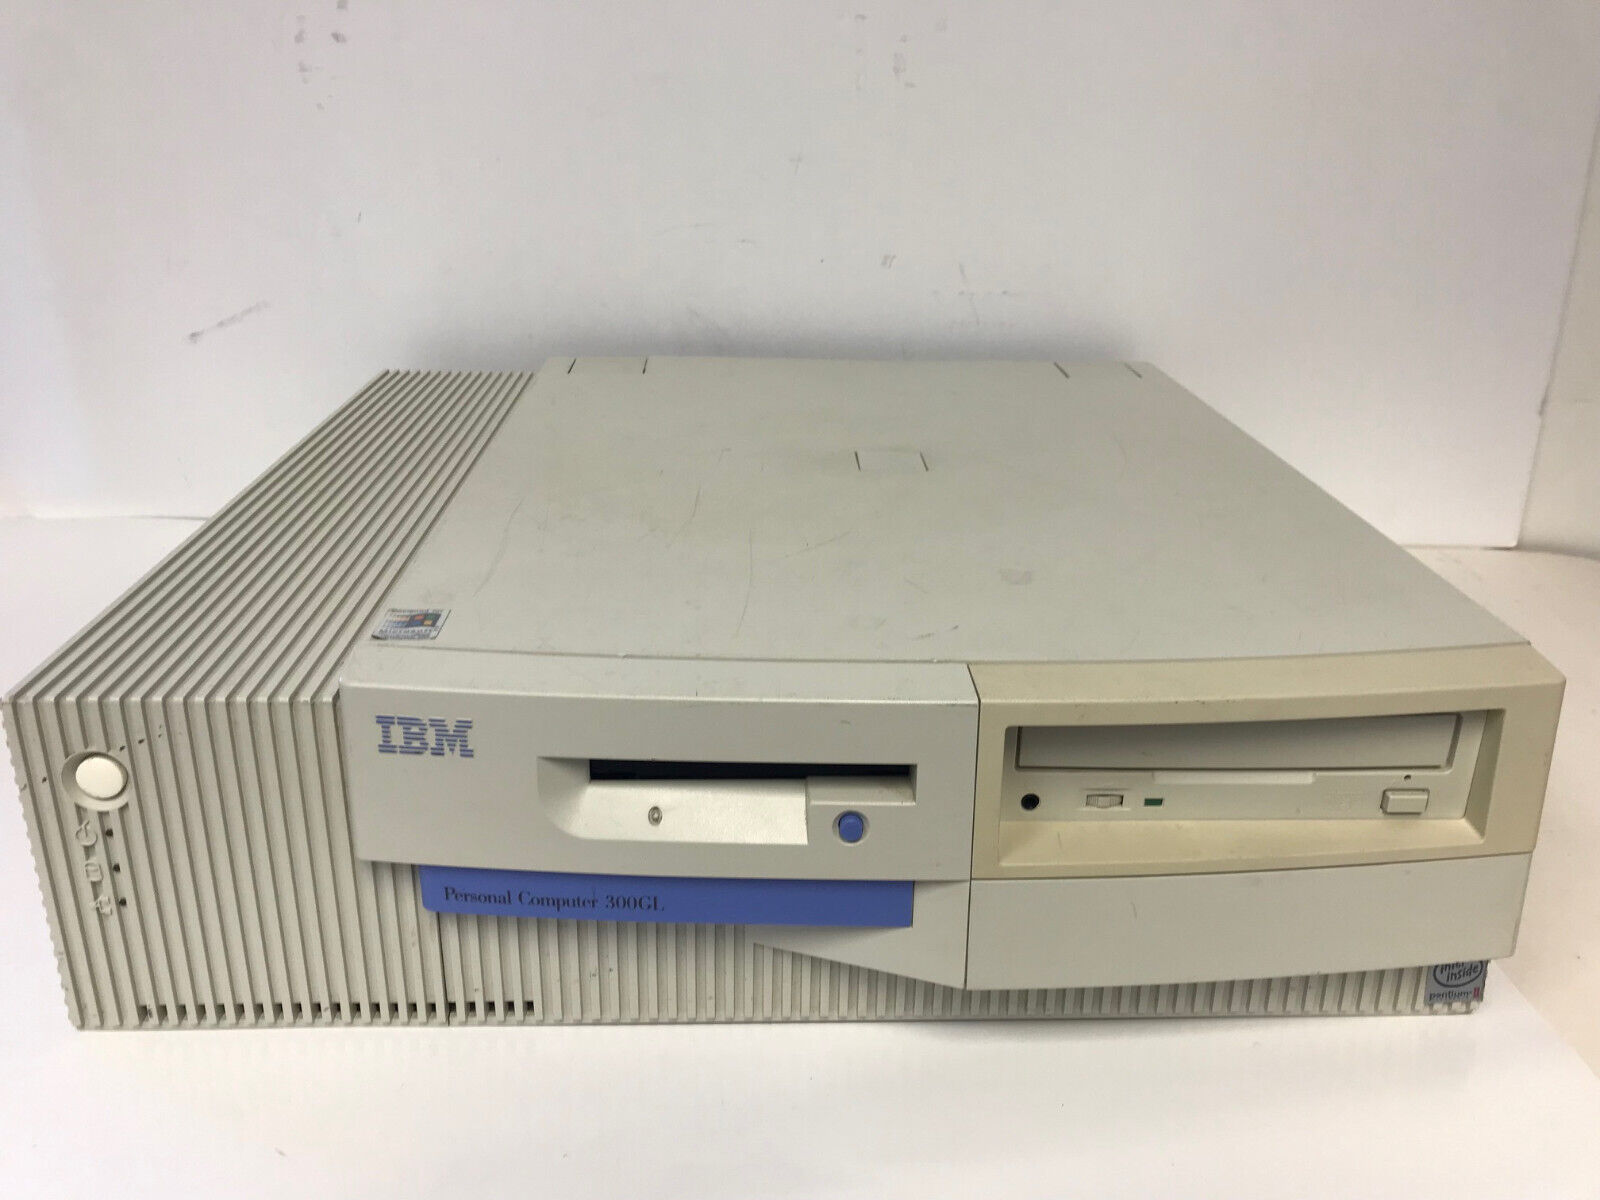 IBM 6275-60U 300GL PC COMPUTER WITH KEYBOARD PII 400MHZ 128MB RAM 6.4GB HD